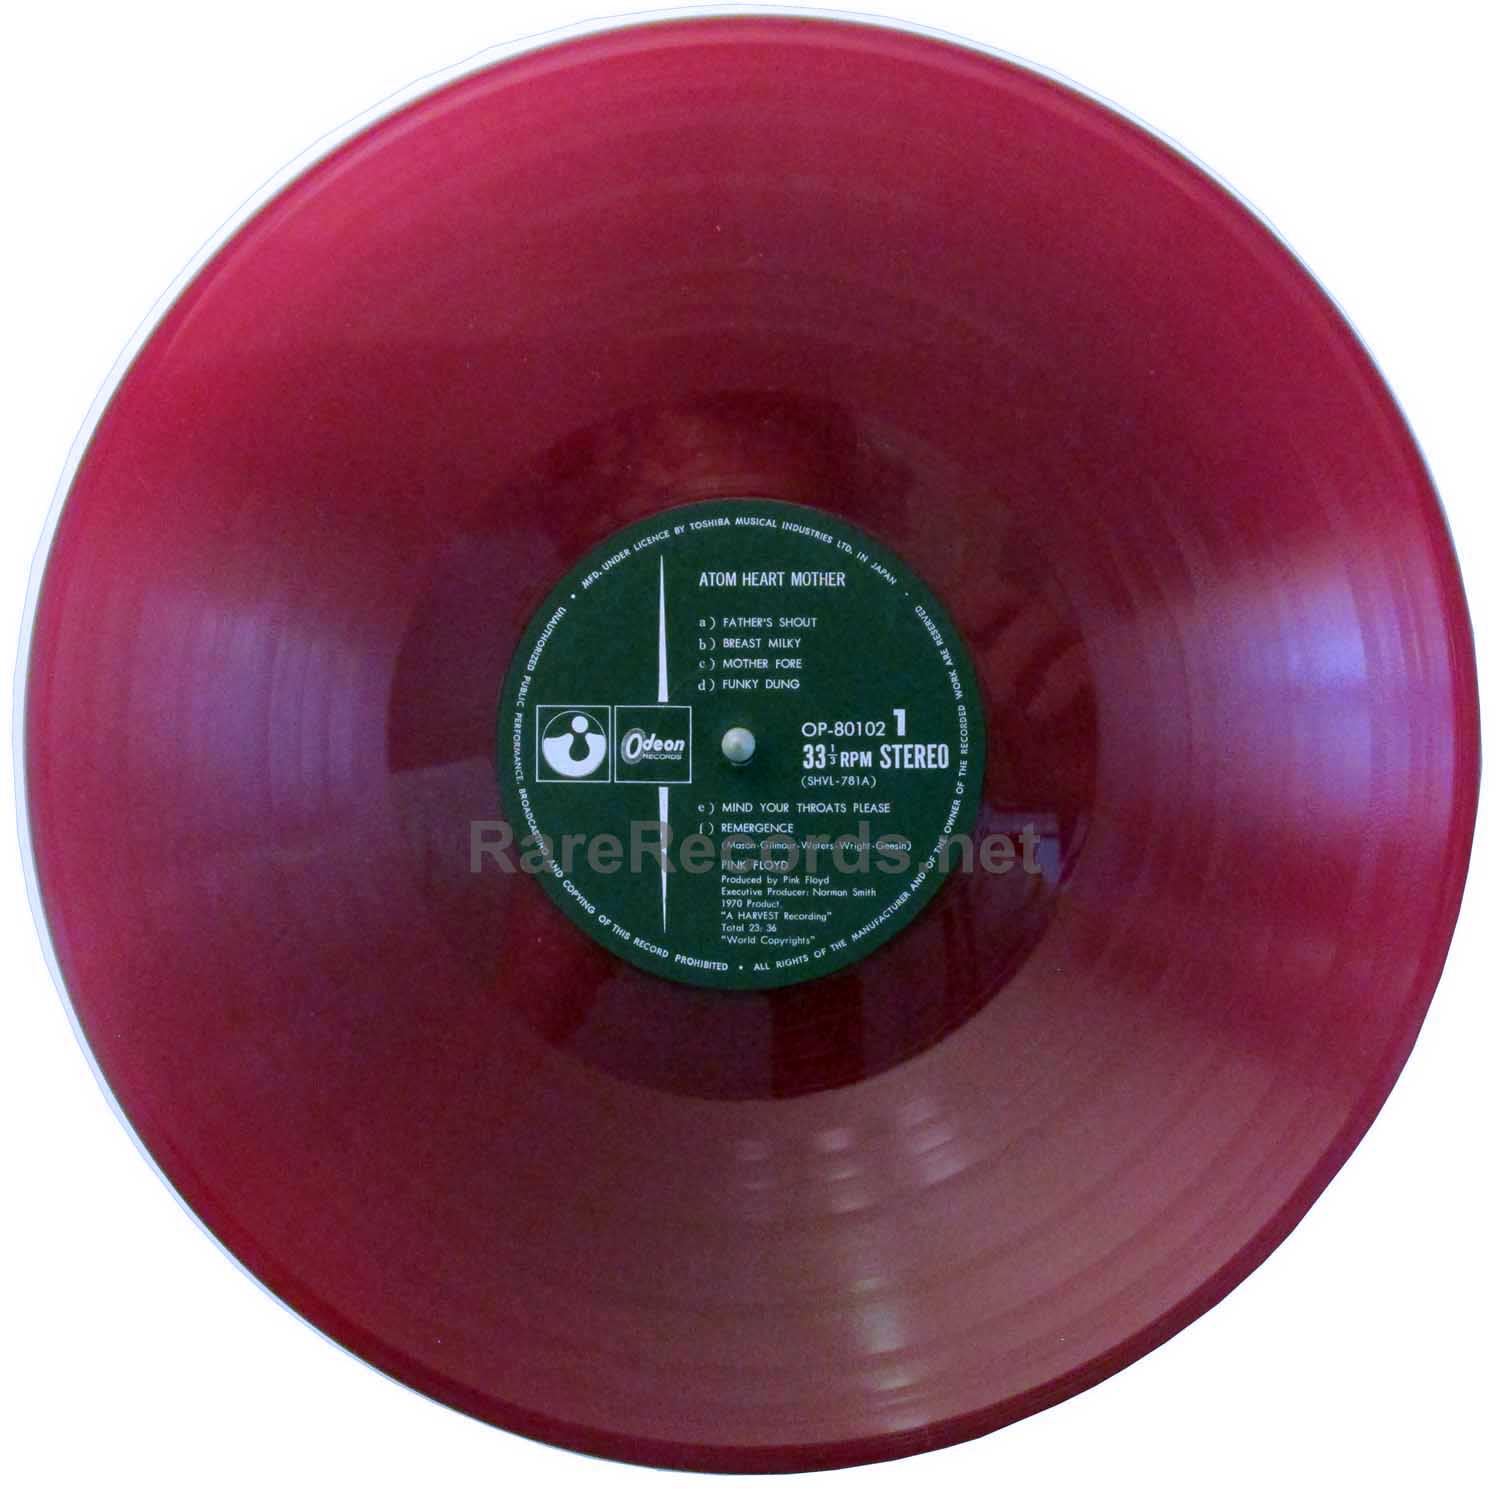 Pink Floyd - Atom Heart Mother red vinyl Japan LP with obi